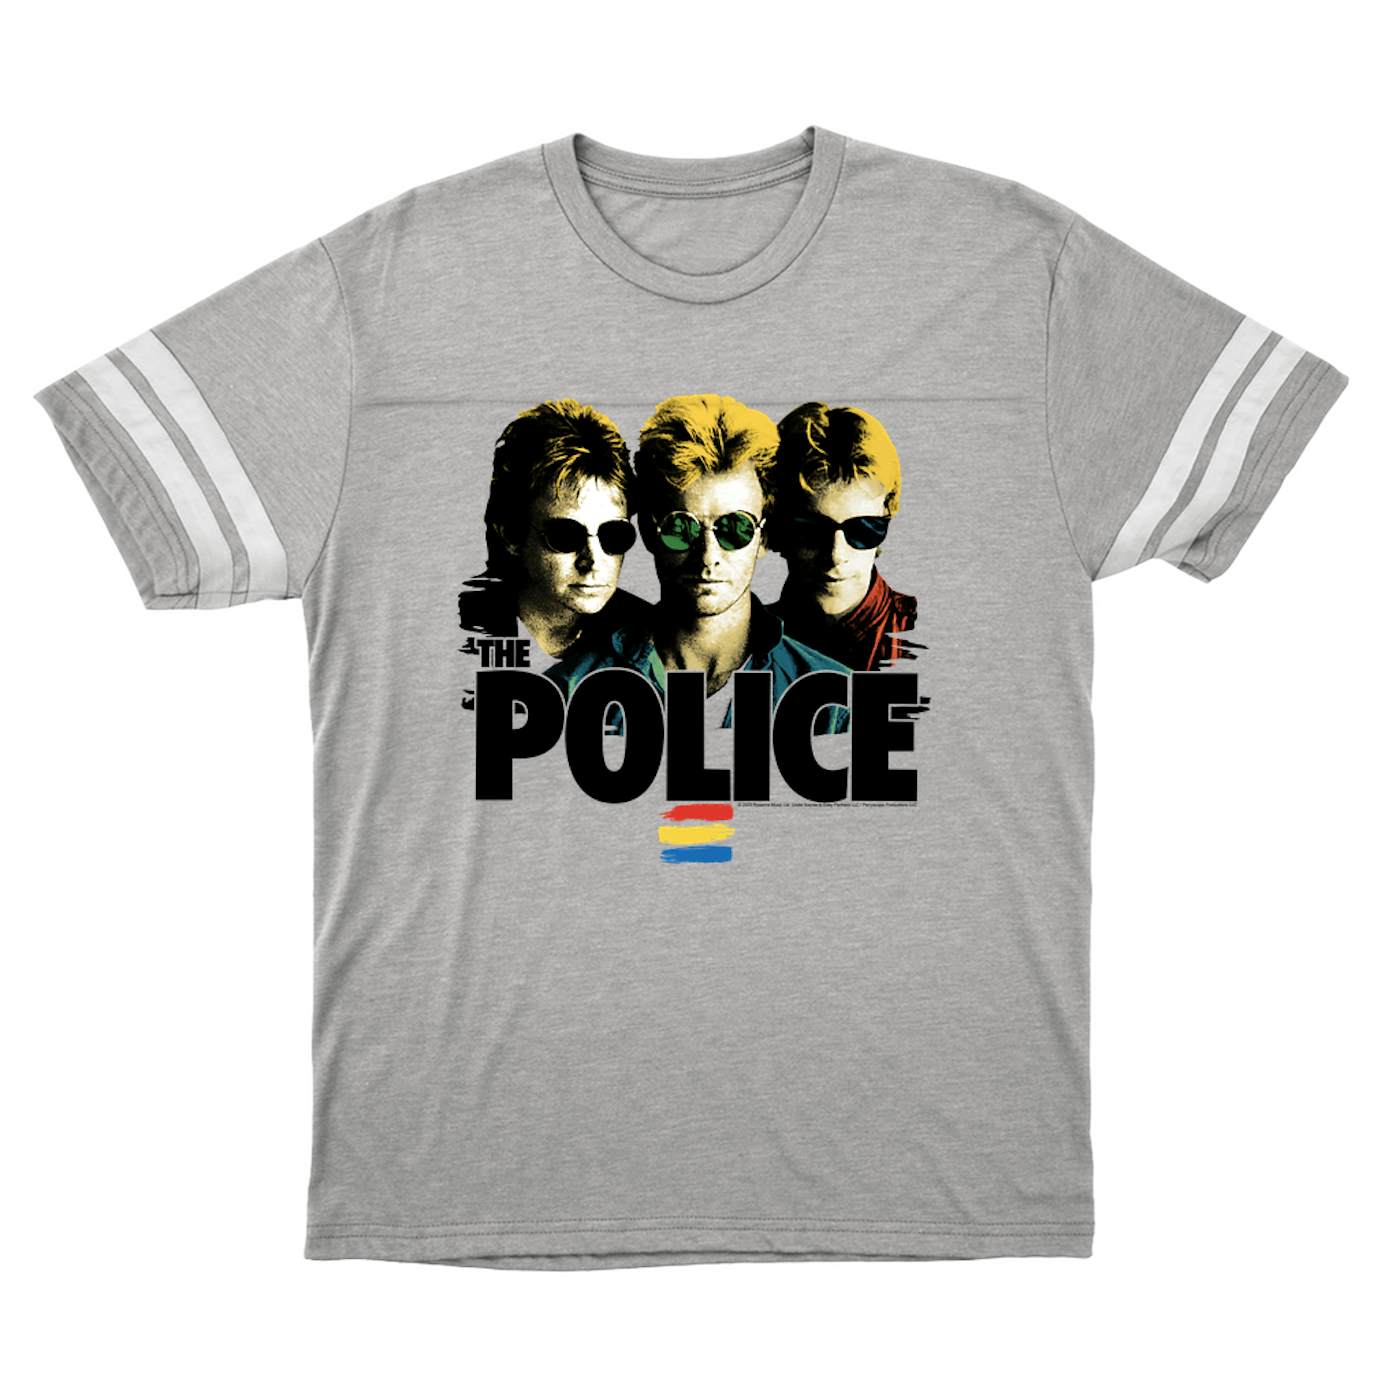 The Police T-Shirt | Synchronicity Shades Image (Merchbar